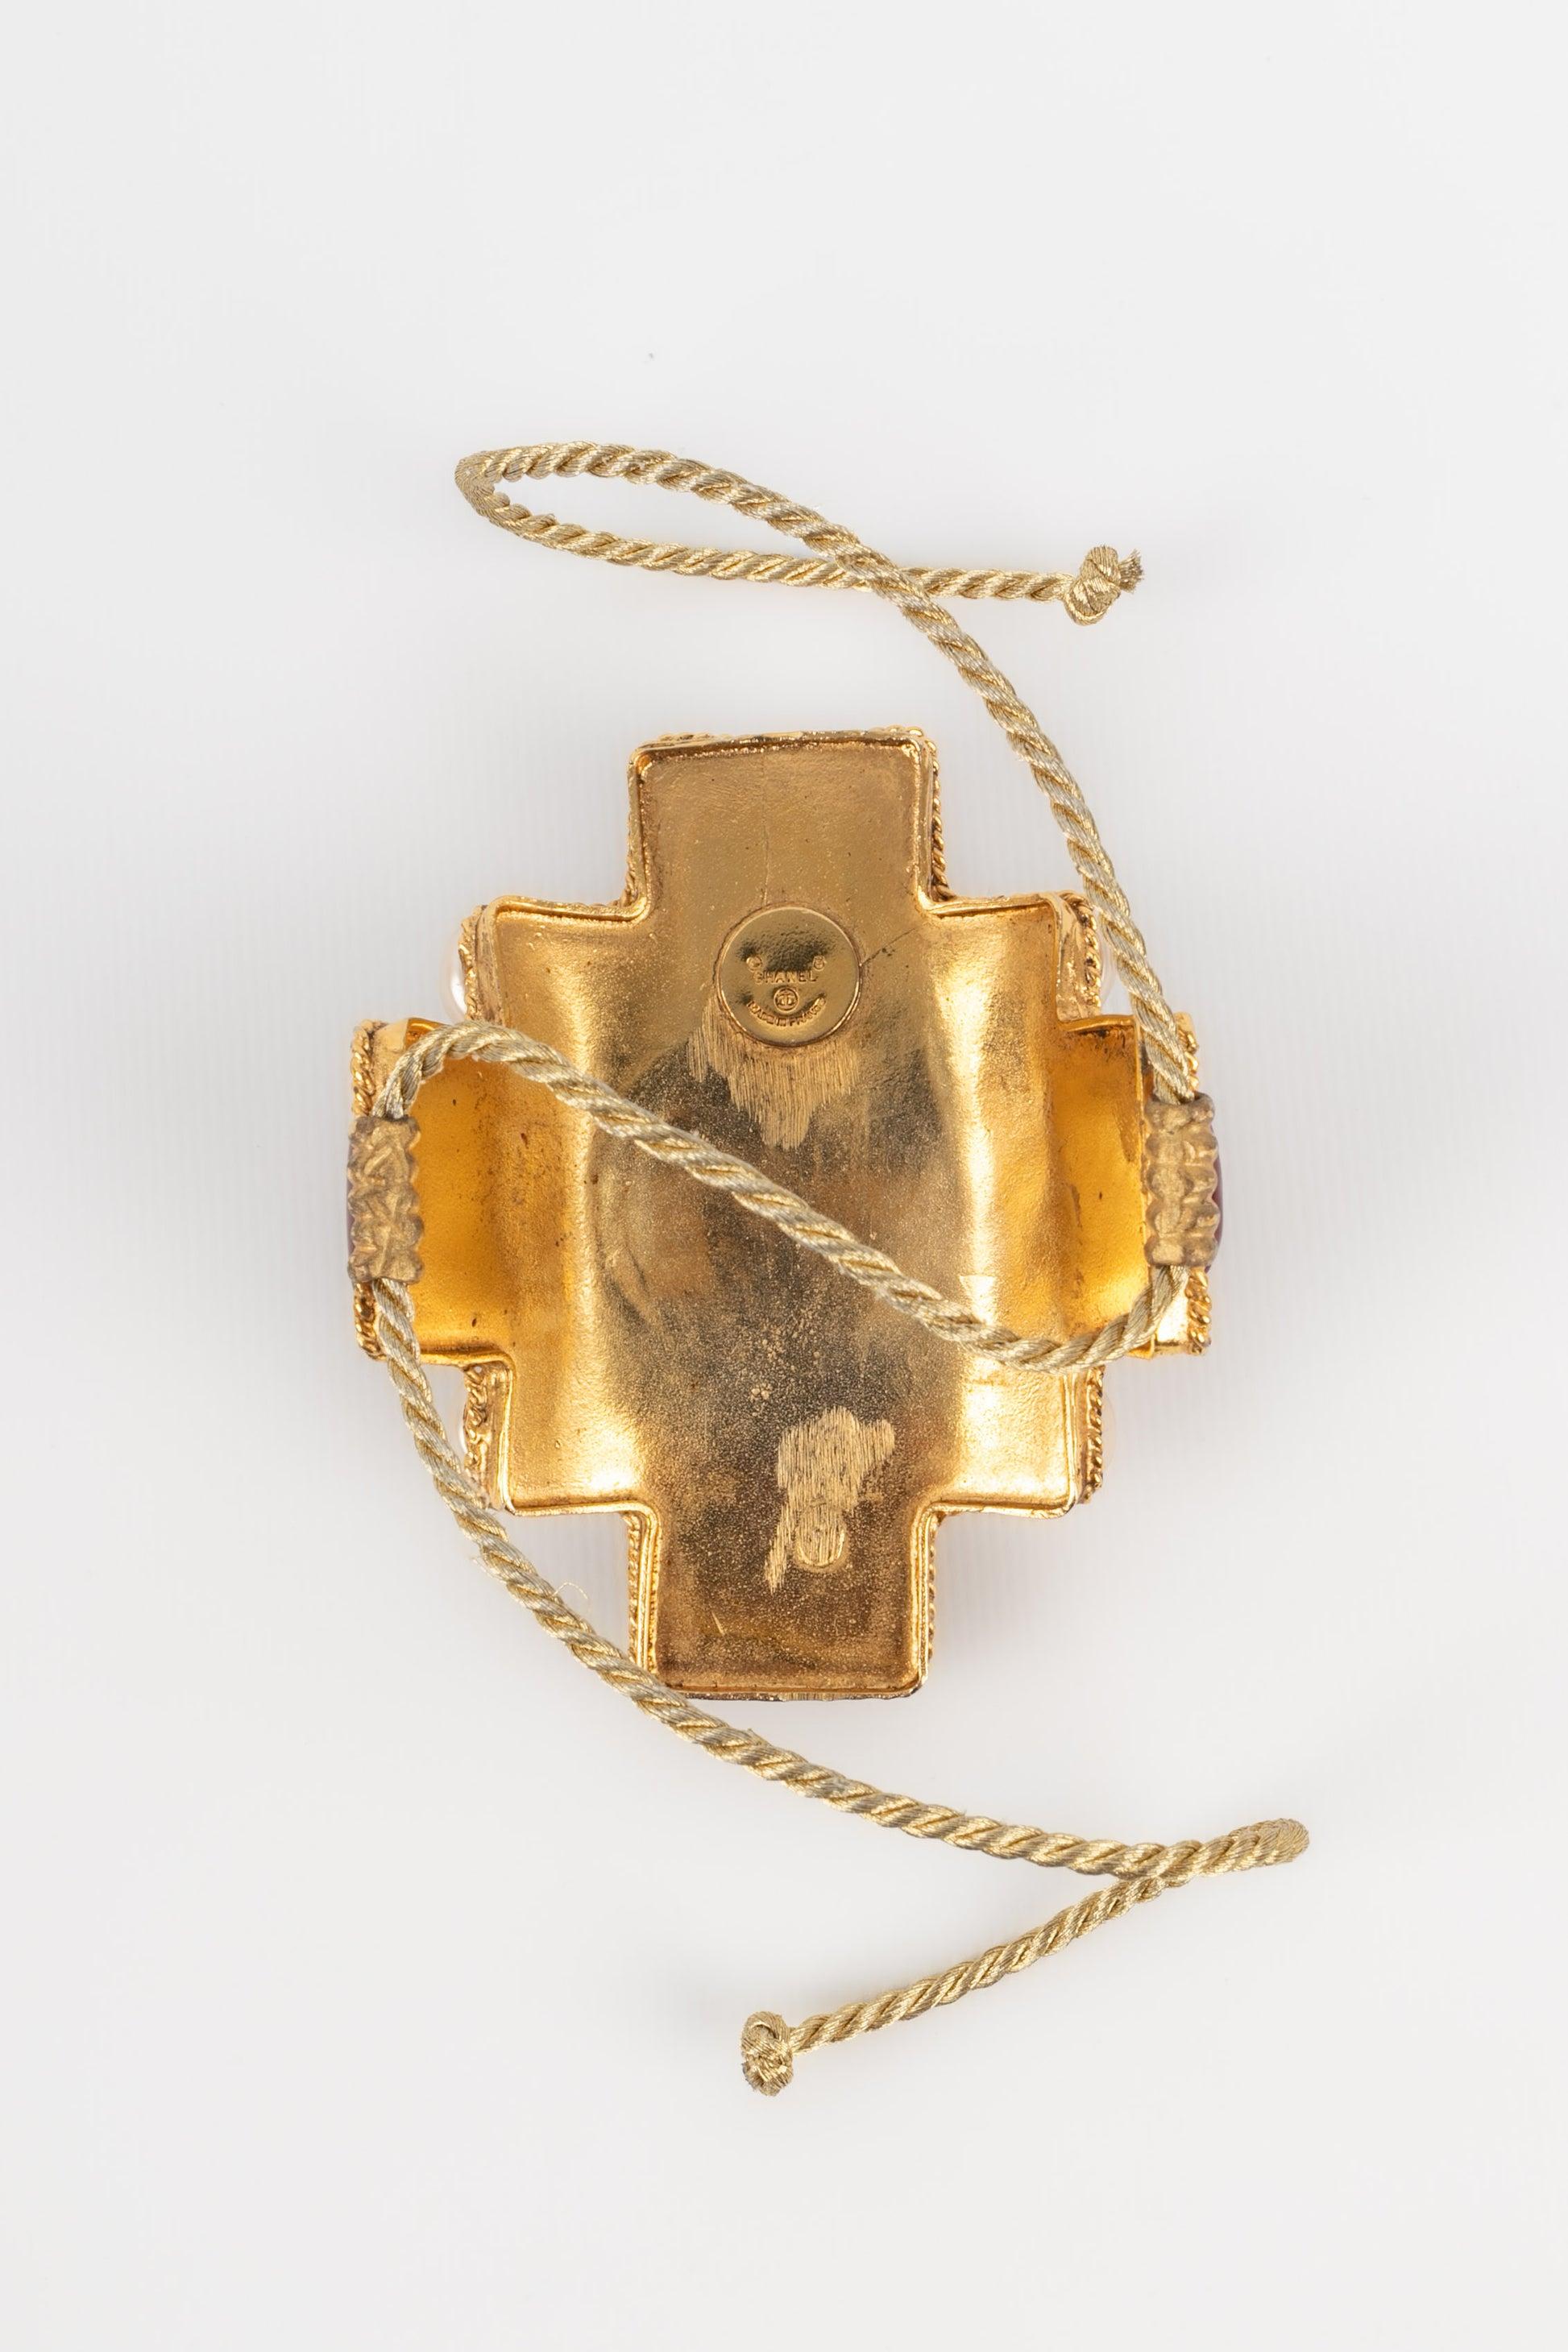 Chanel Arm Bracelet in Golden Metal, 1990/1991 2